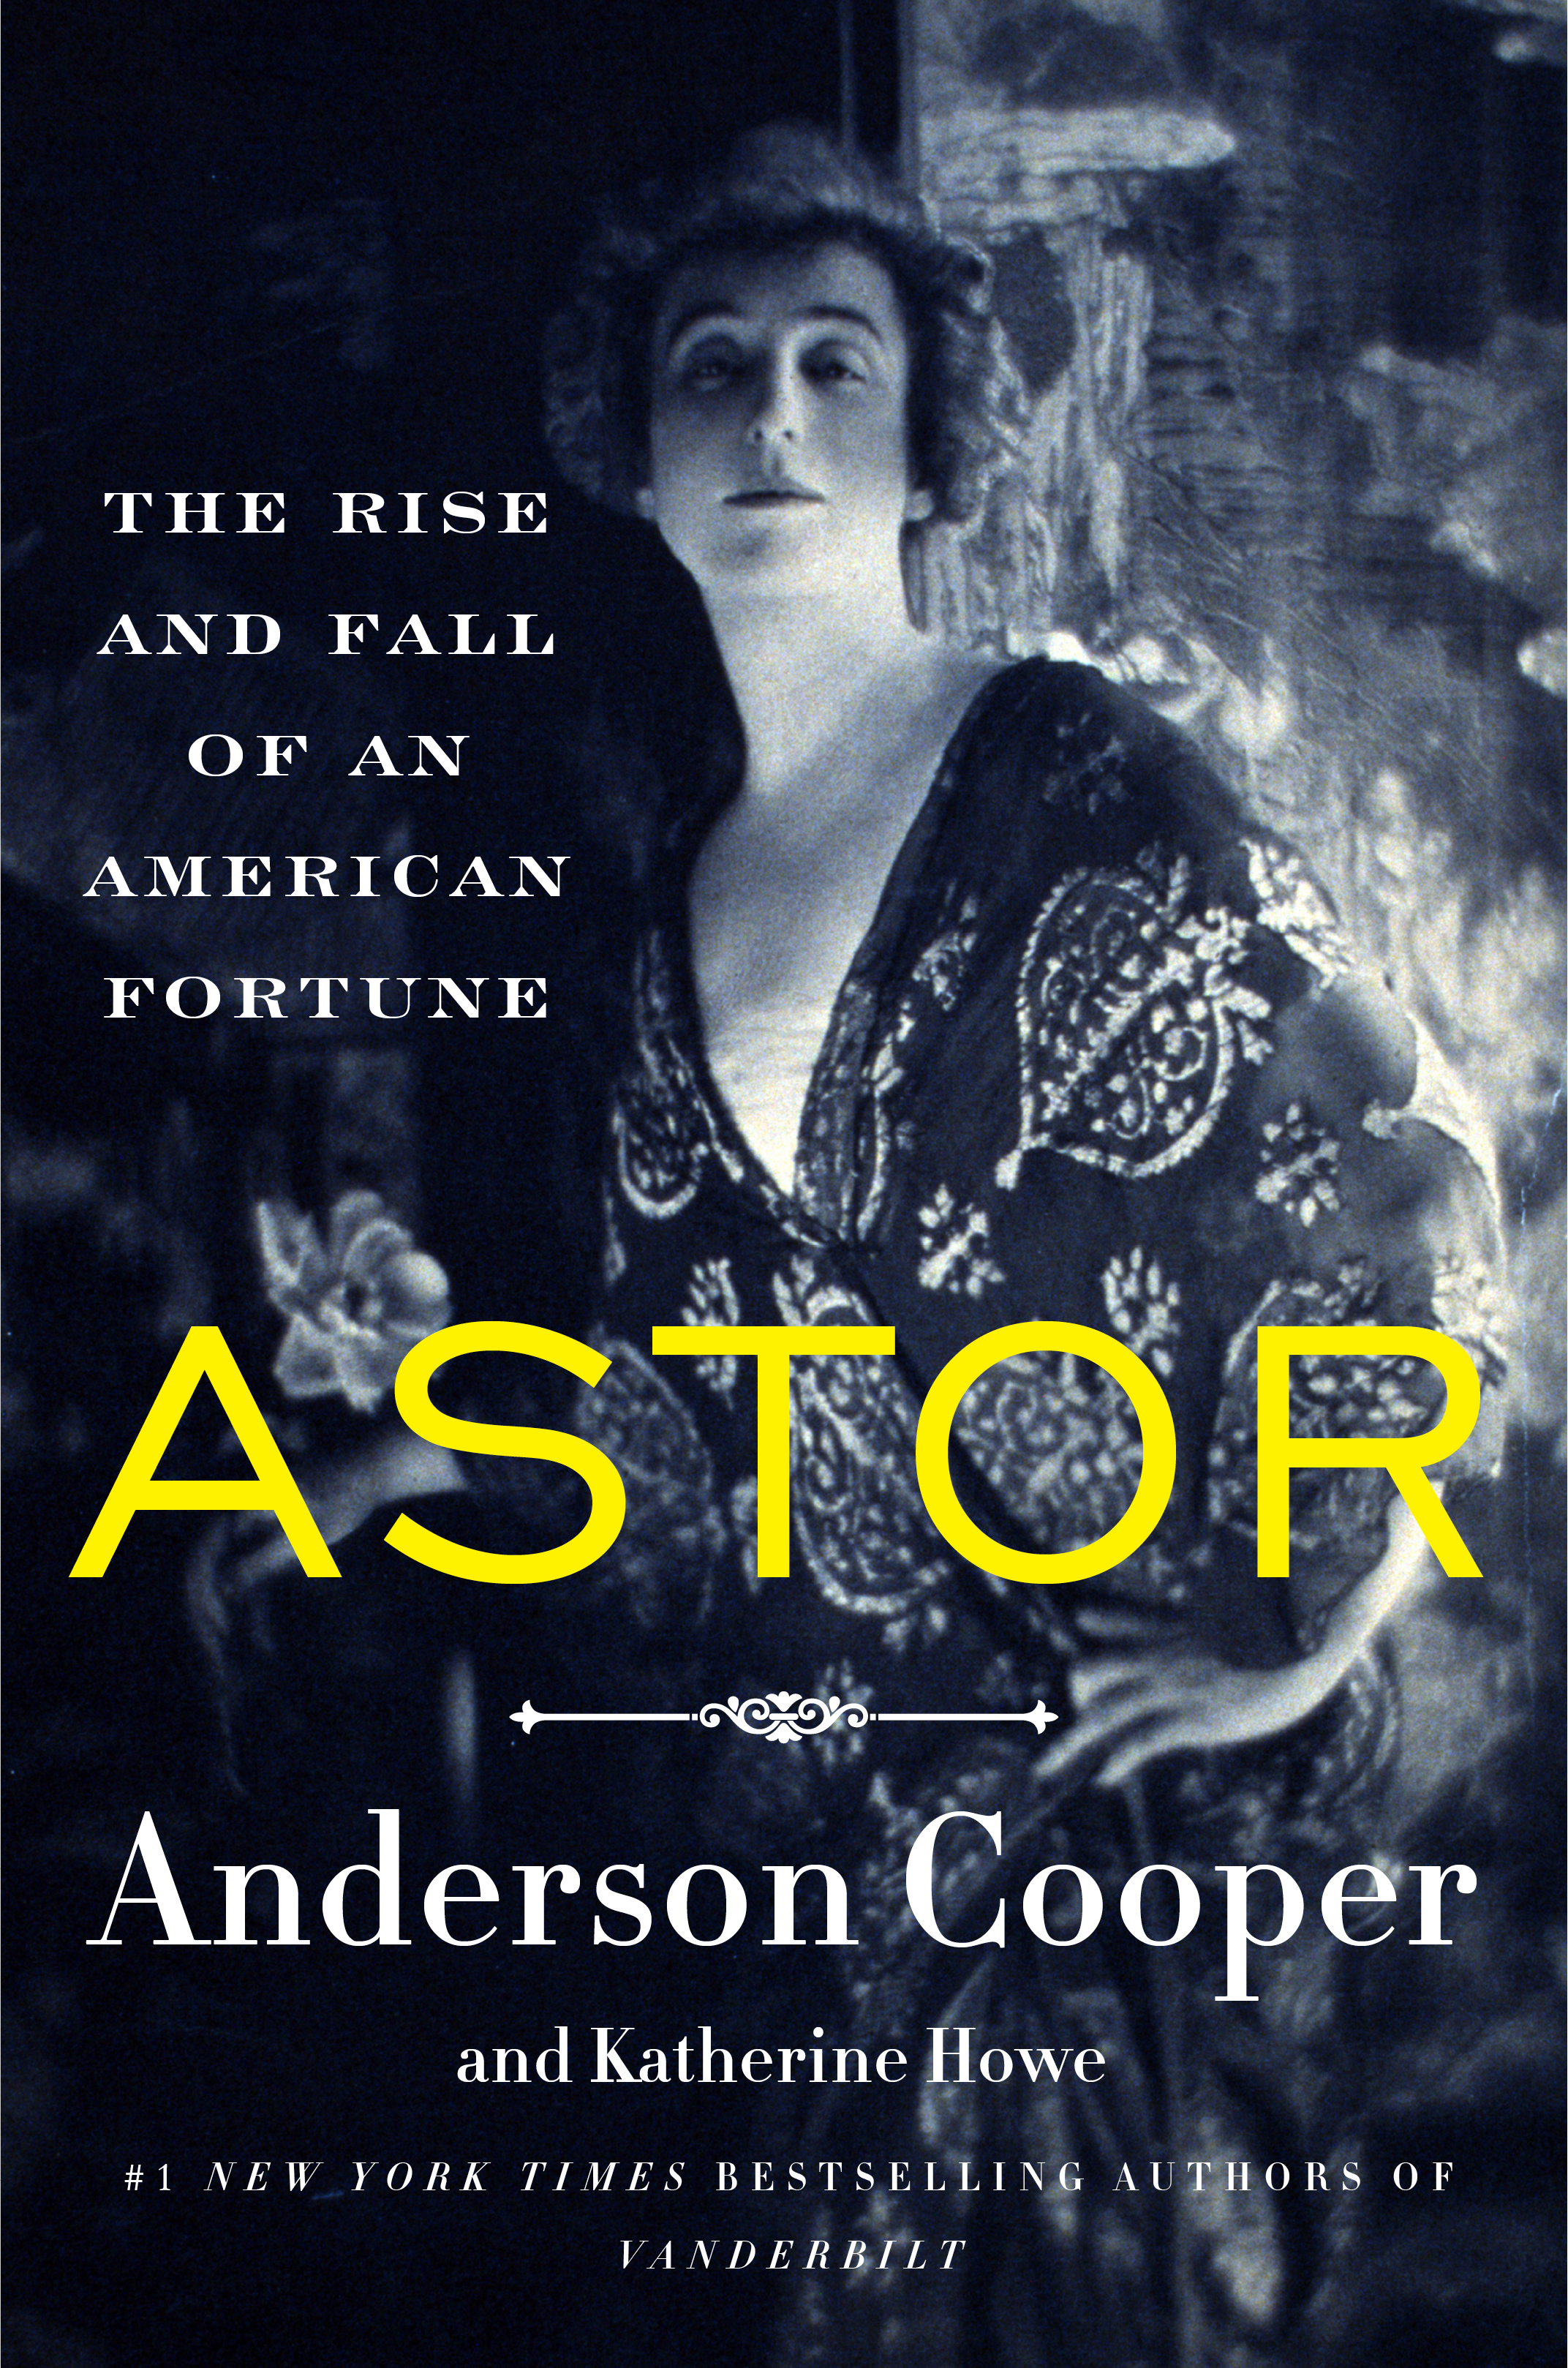 BookHampton VIRTUALLY Presents Anderson Cooper, "Astor"